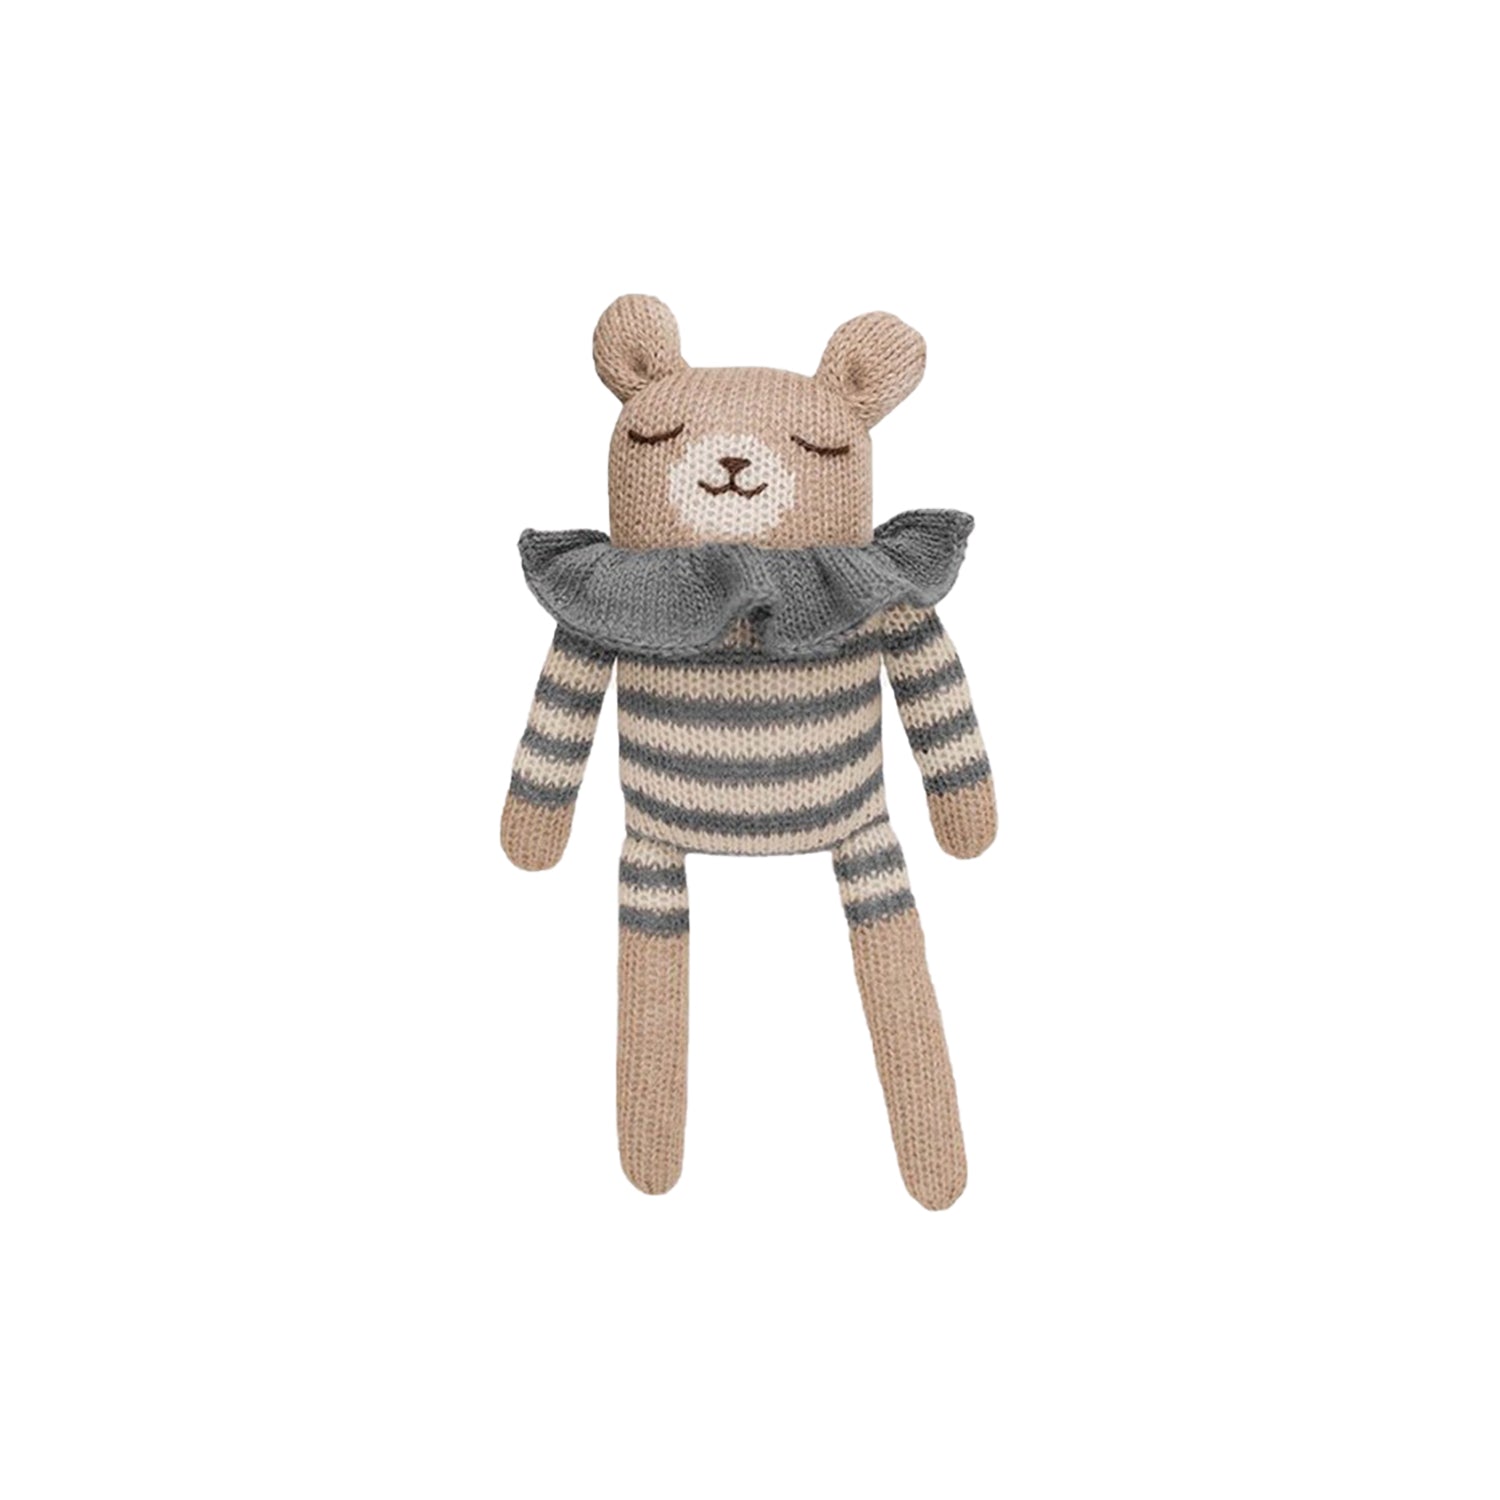 Main Sauvage Teddy Soft Toy - Slate Striped